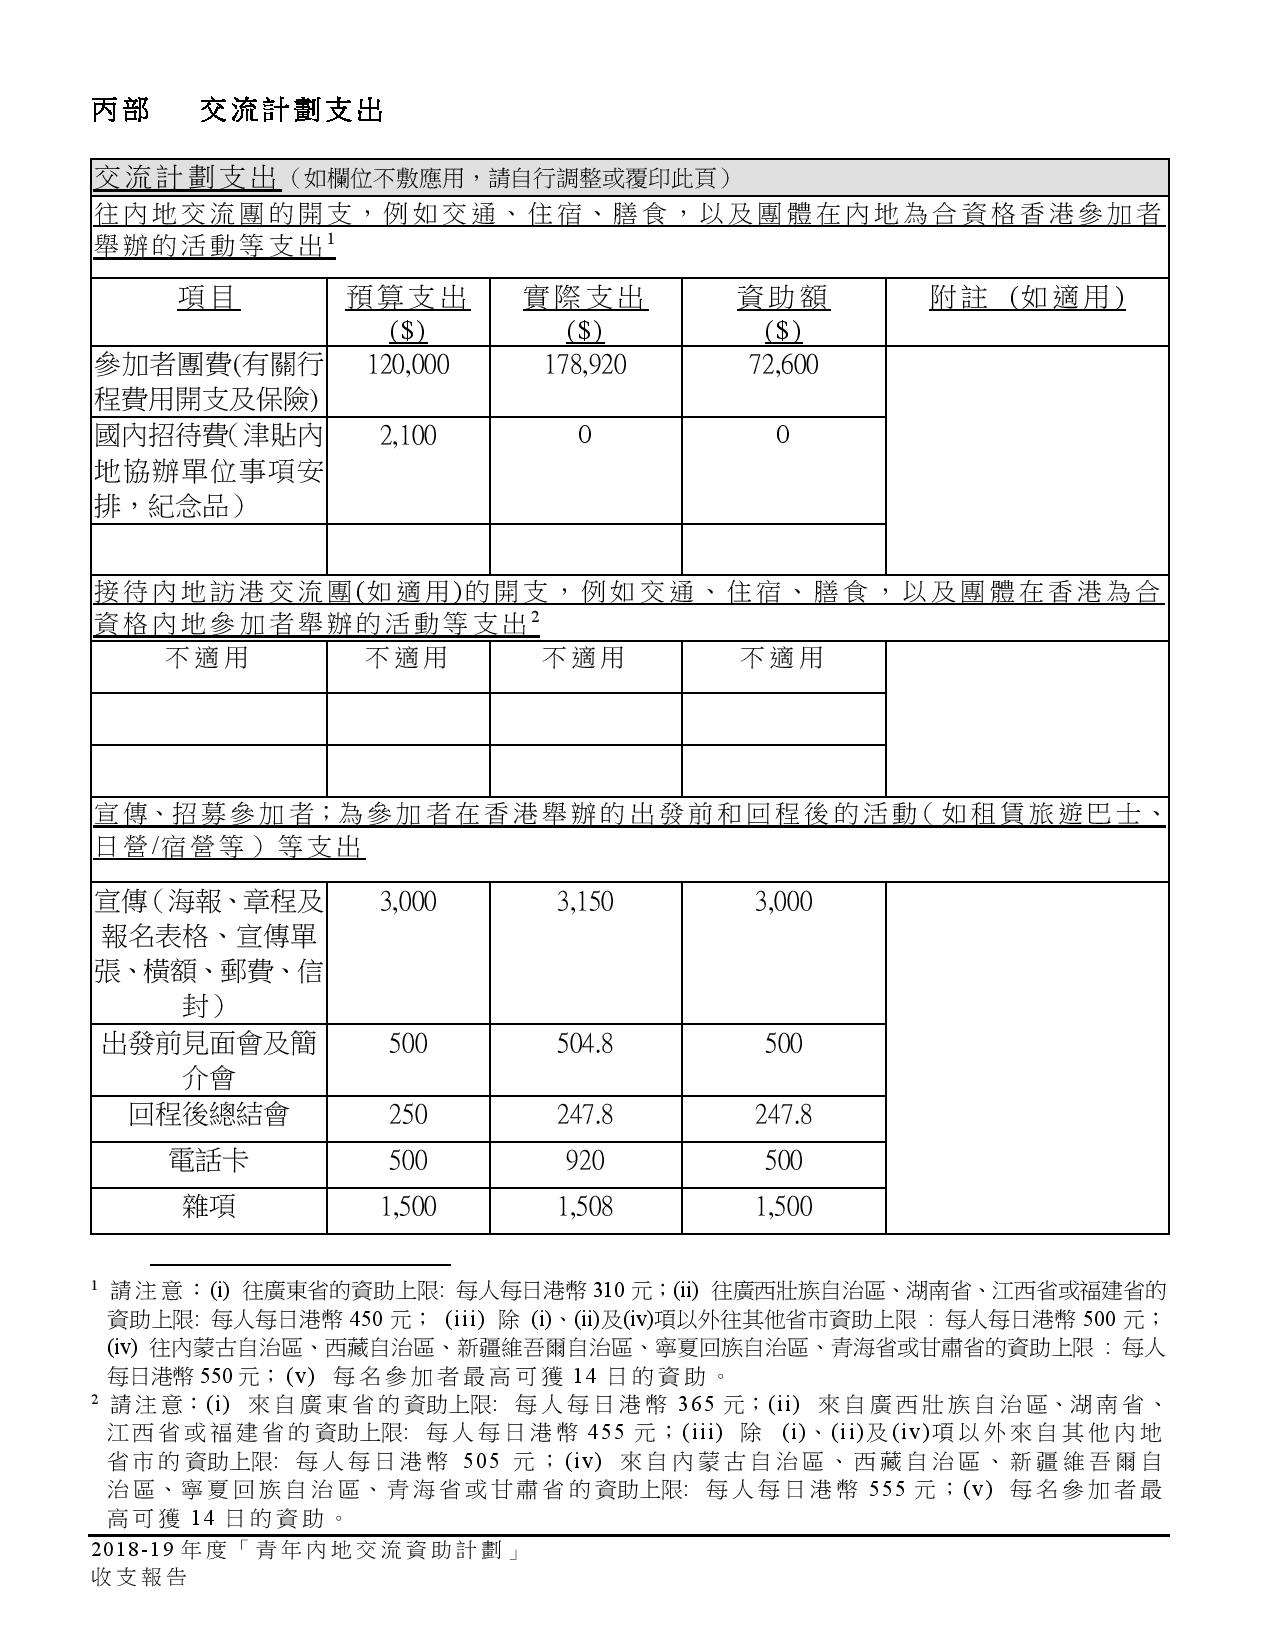 HKCFA_君主附件八 - 收支報告 (1)-page-002(P.2).jpg